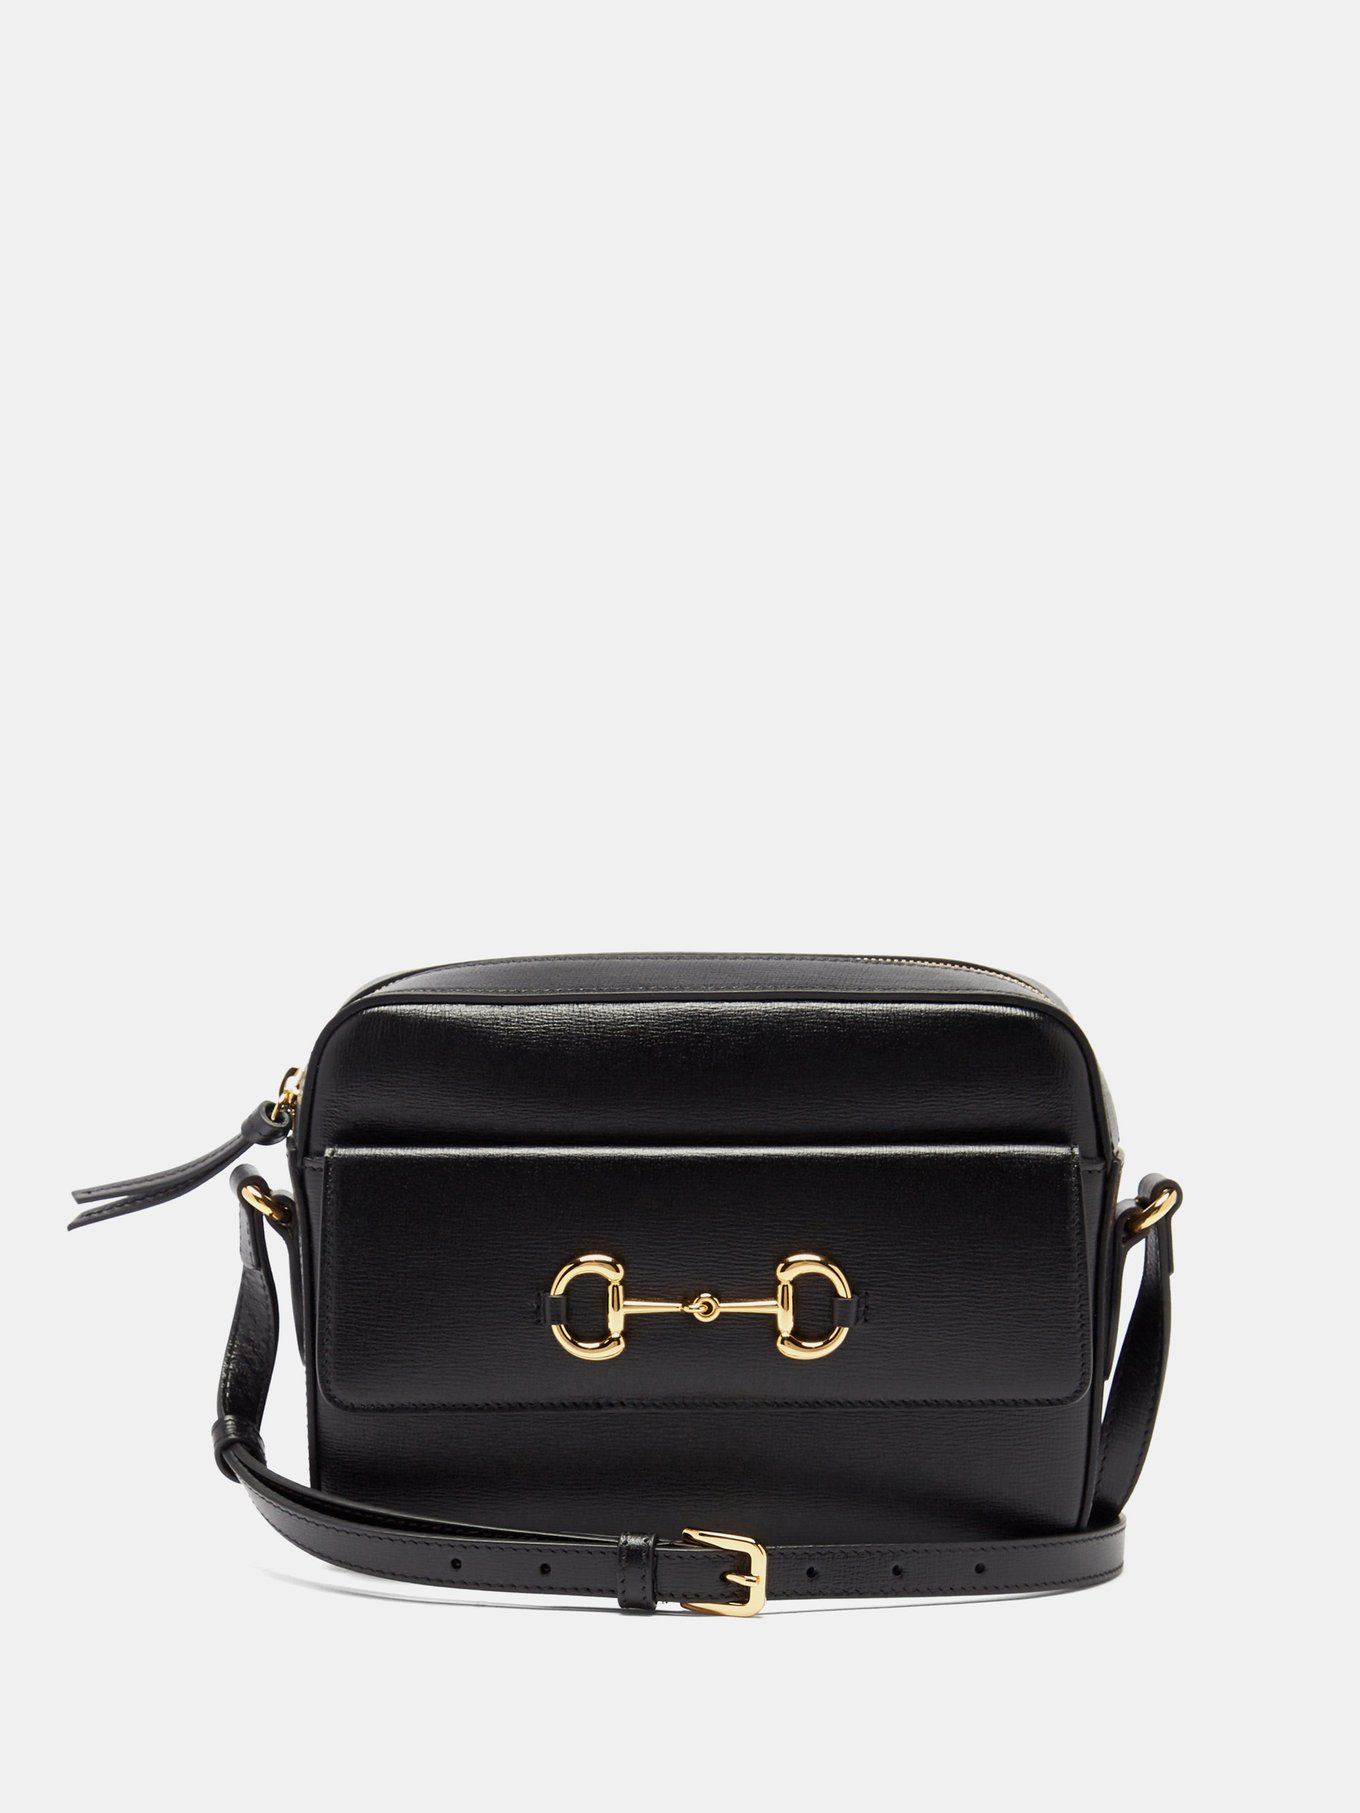 Black 1955 Horsebit leather cross-body bag, Gucci